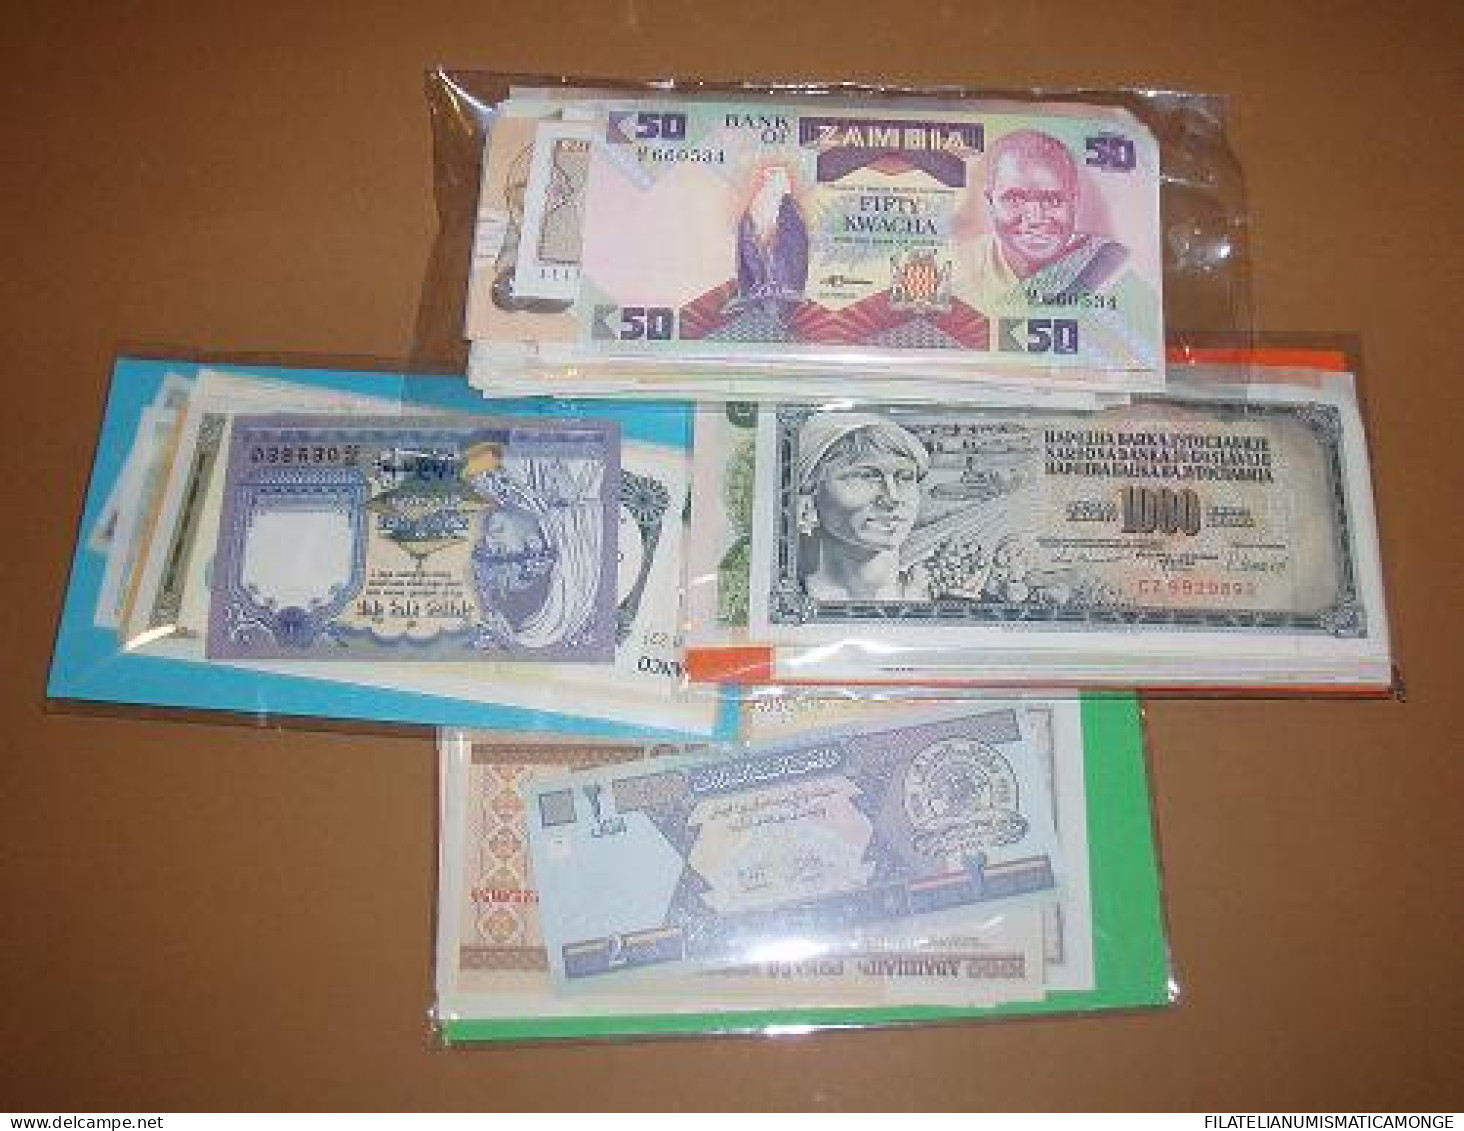  Offer - Lot Banknotes - Paqueteria  Mundial 150 Billetes Diferentes / Foto Gen - Lots & Kiloware - Banknotes